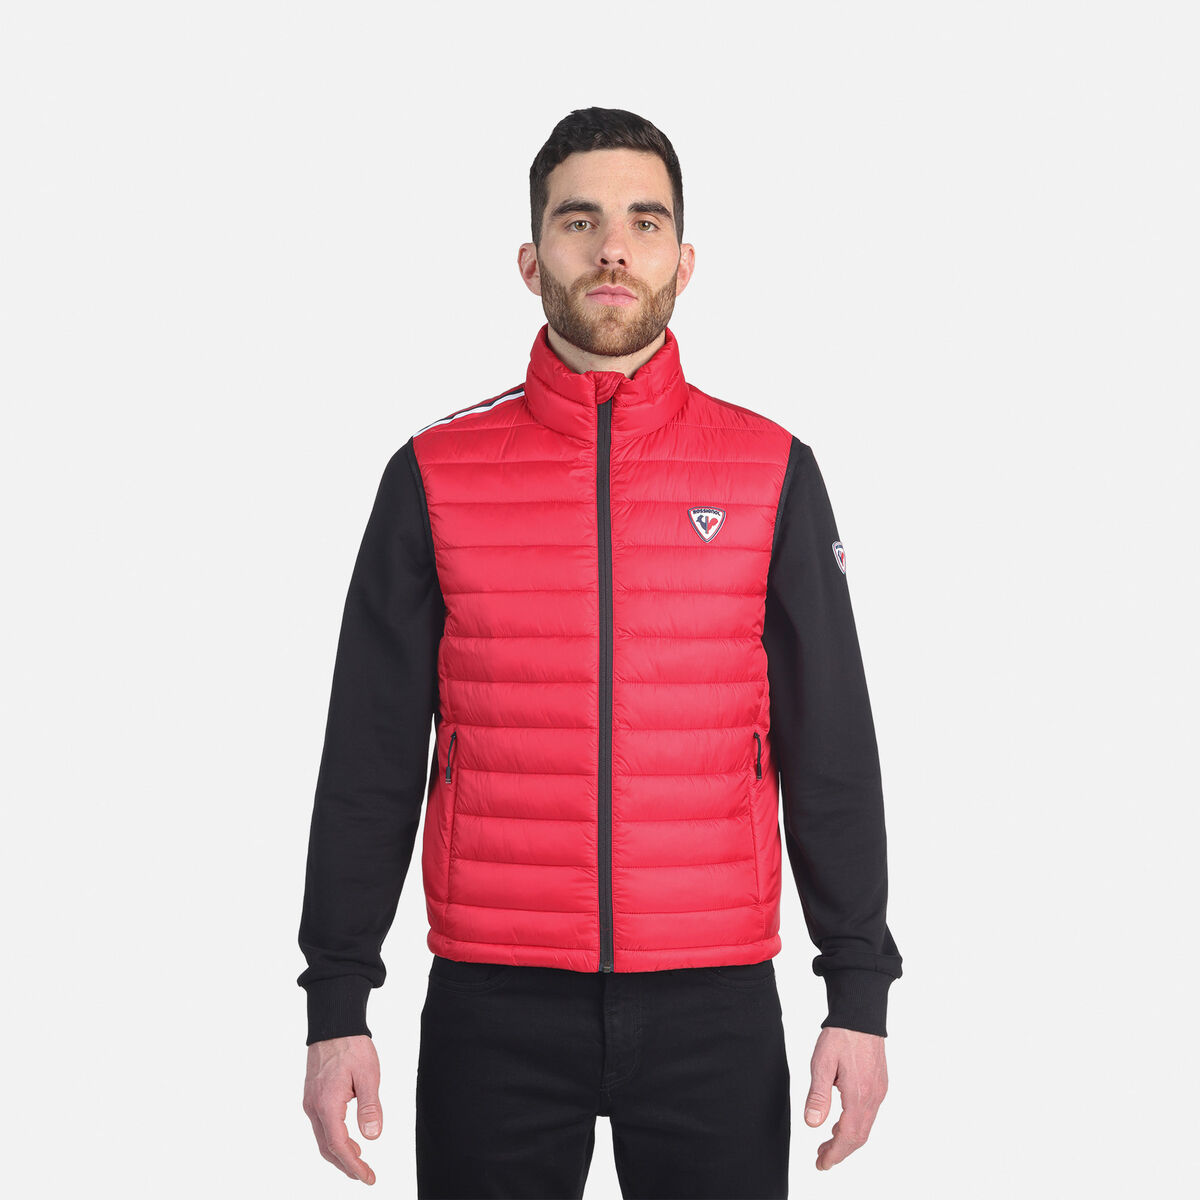 Men's insulated vest 100GR